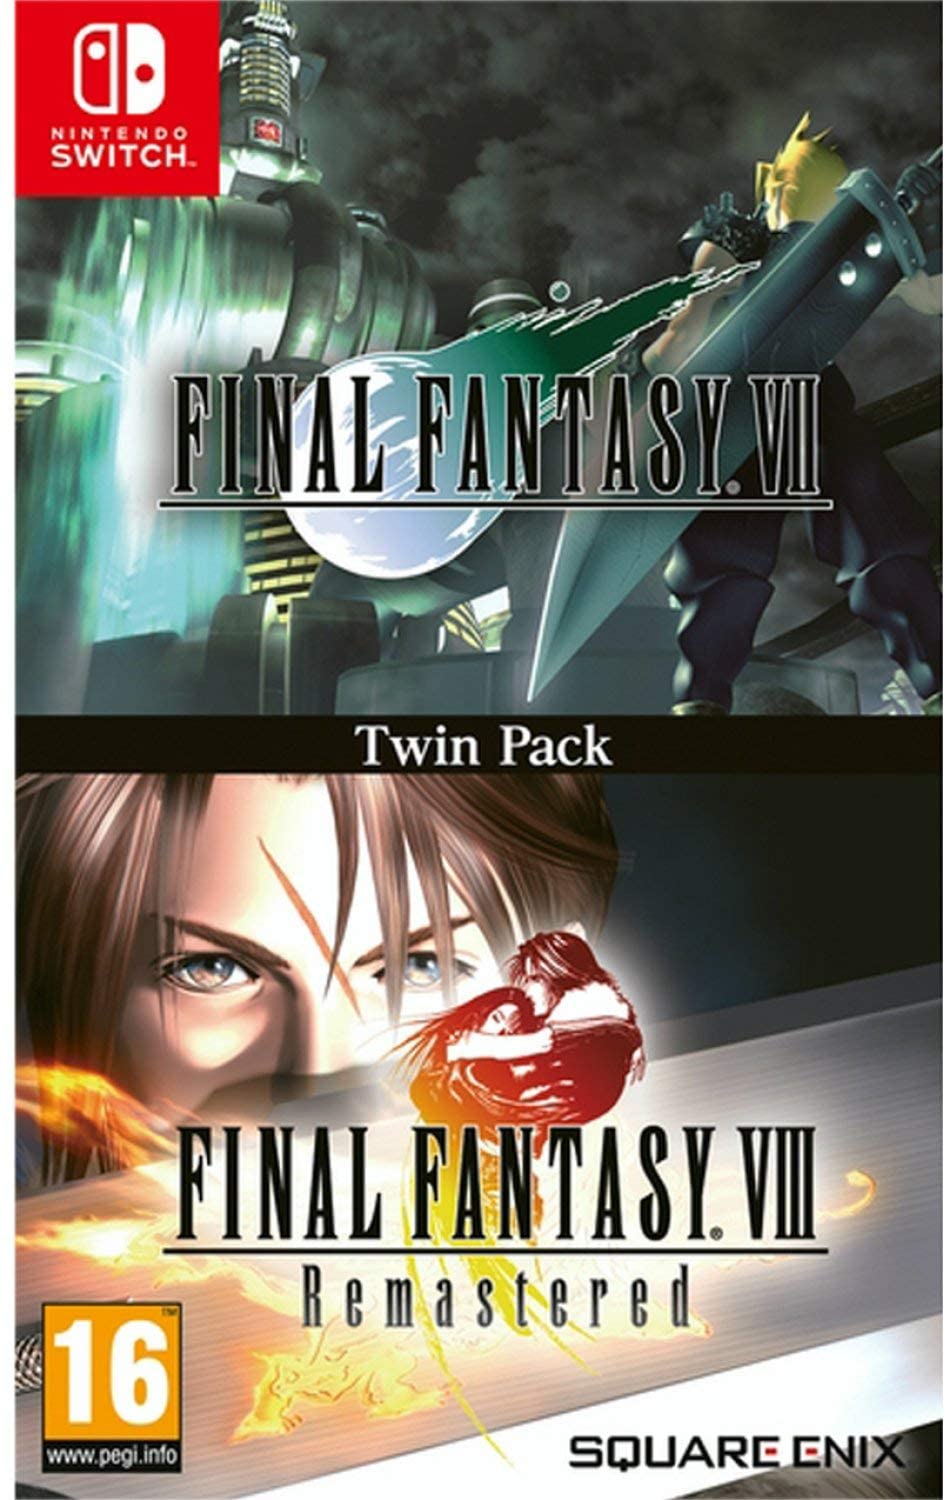 Final Fantasy VII  Final Fantasy VIII Remastered Twin Pack ファイナルファンタジー リマスター ツインパック Nintendo switch ニンテンドー スイッチ  ソフト版 日本語対応 輸入ver.